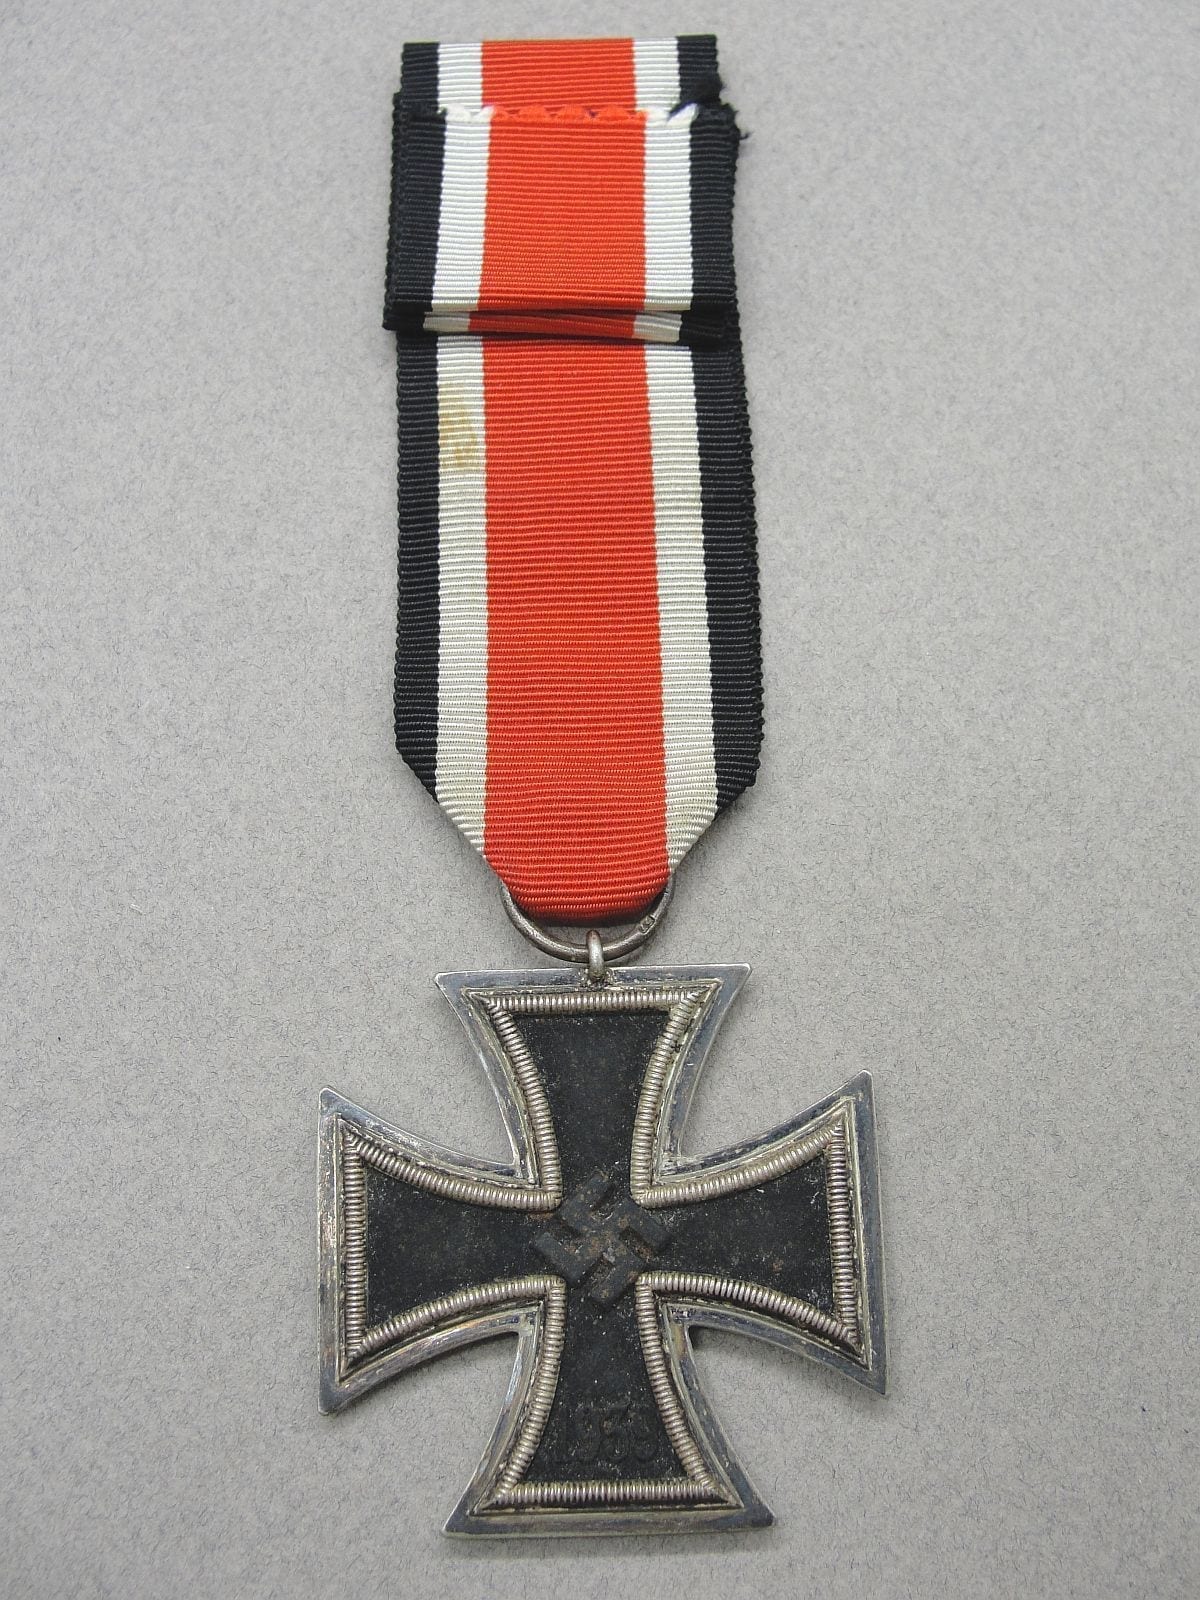 1939 Iron Cross Second Class by "27" - Anton Schenkl Wien